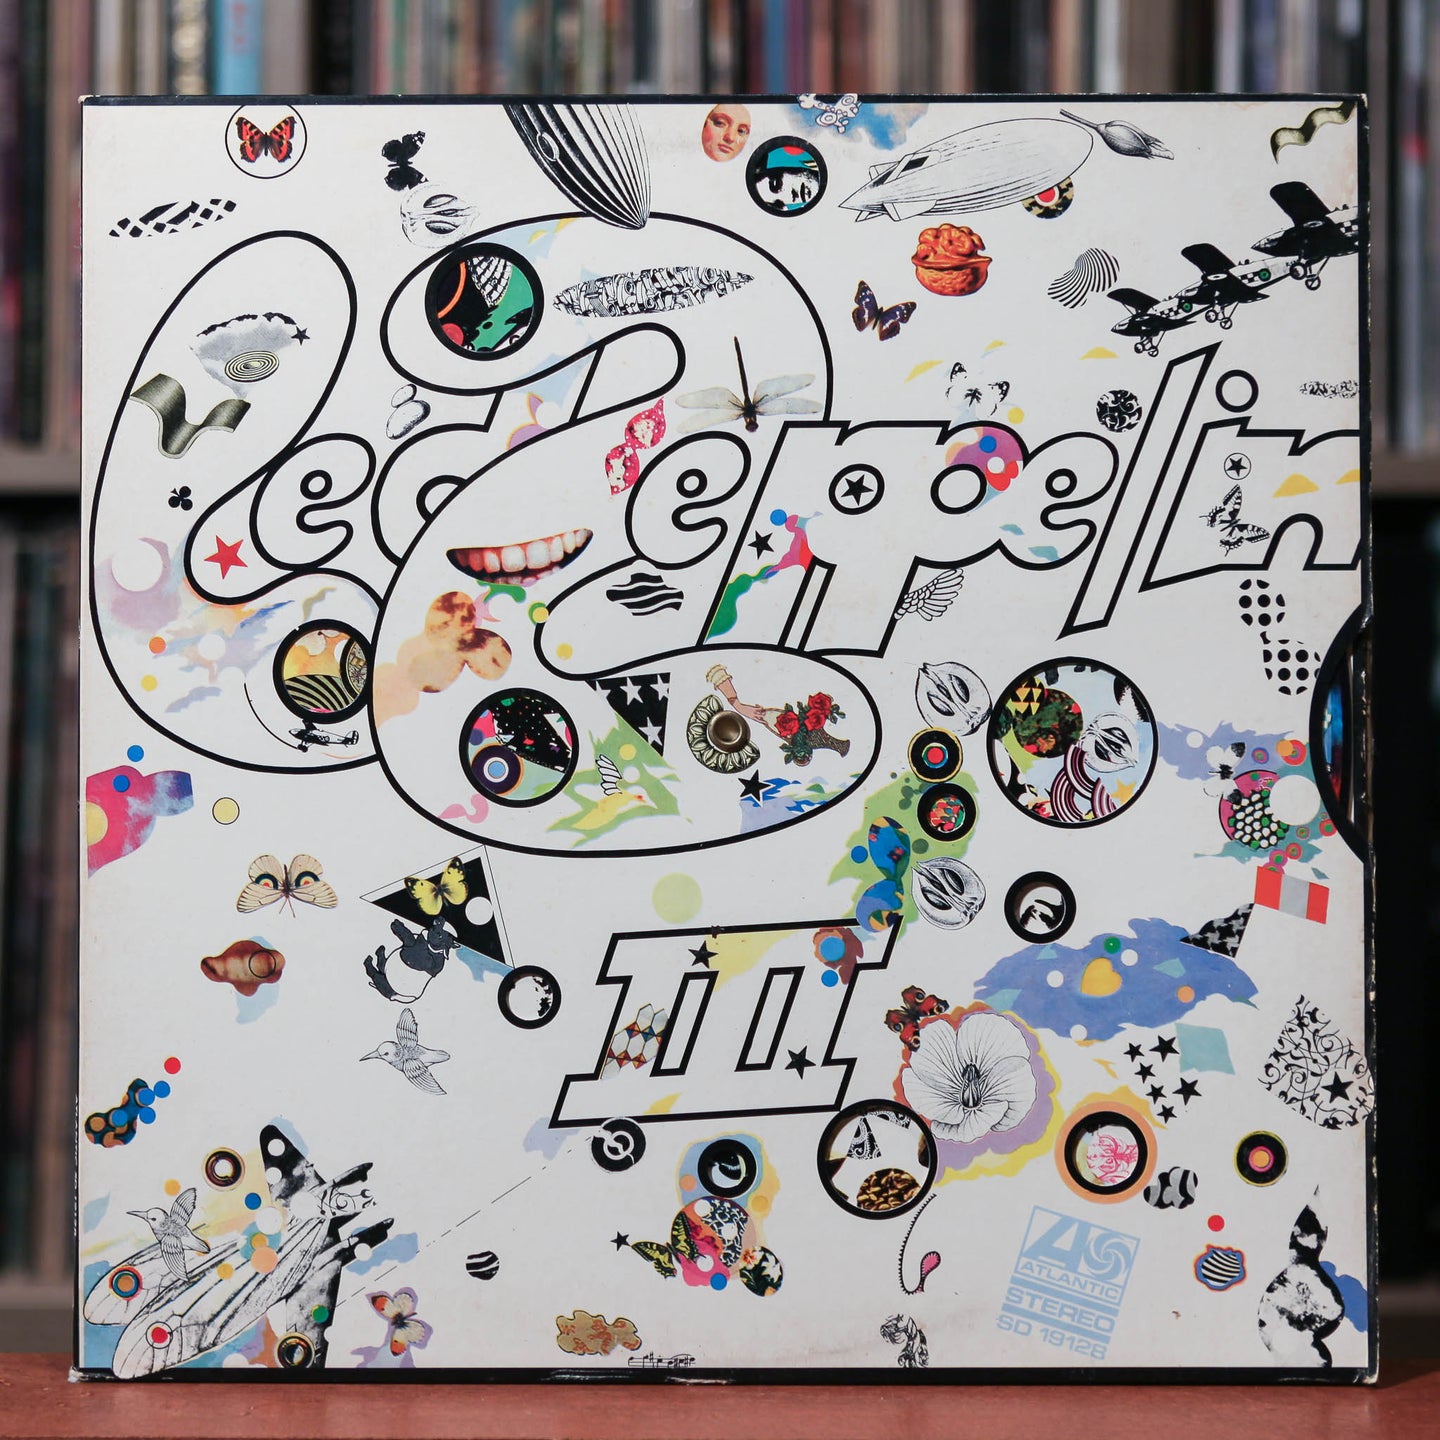 Led Zeppelin - III - 1970 Atlantic - VG+/VG+